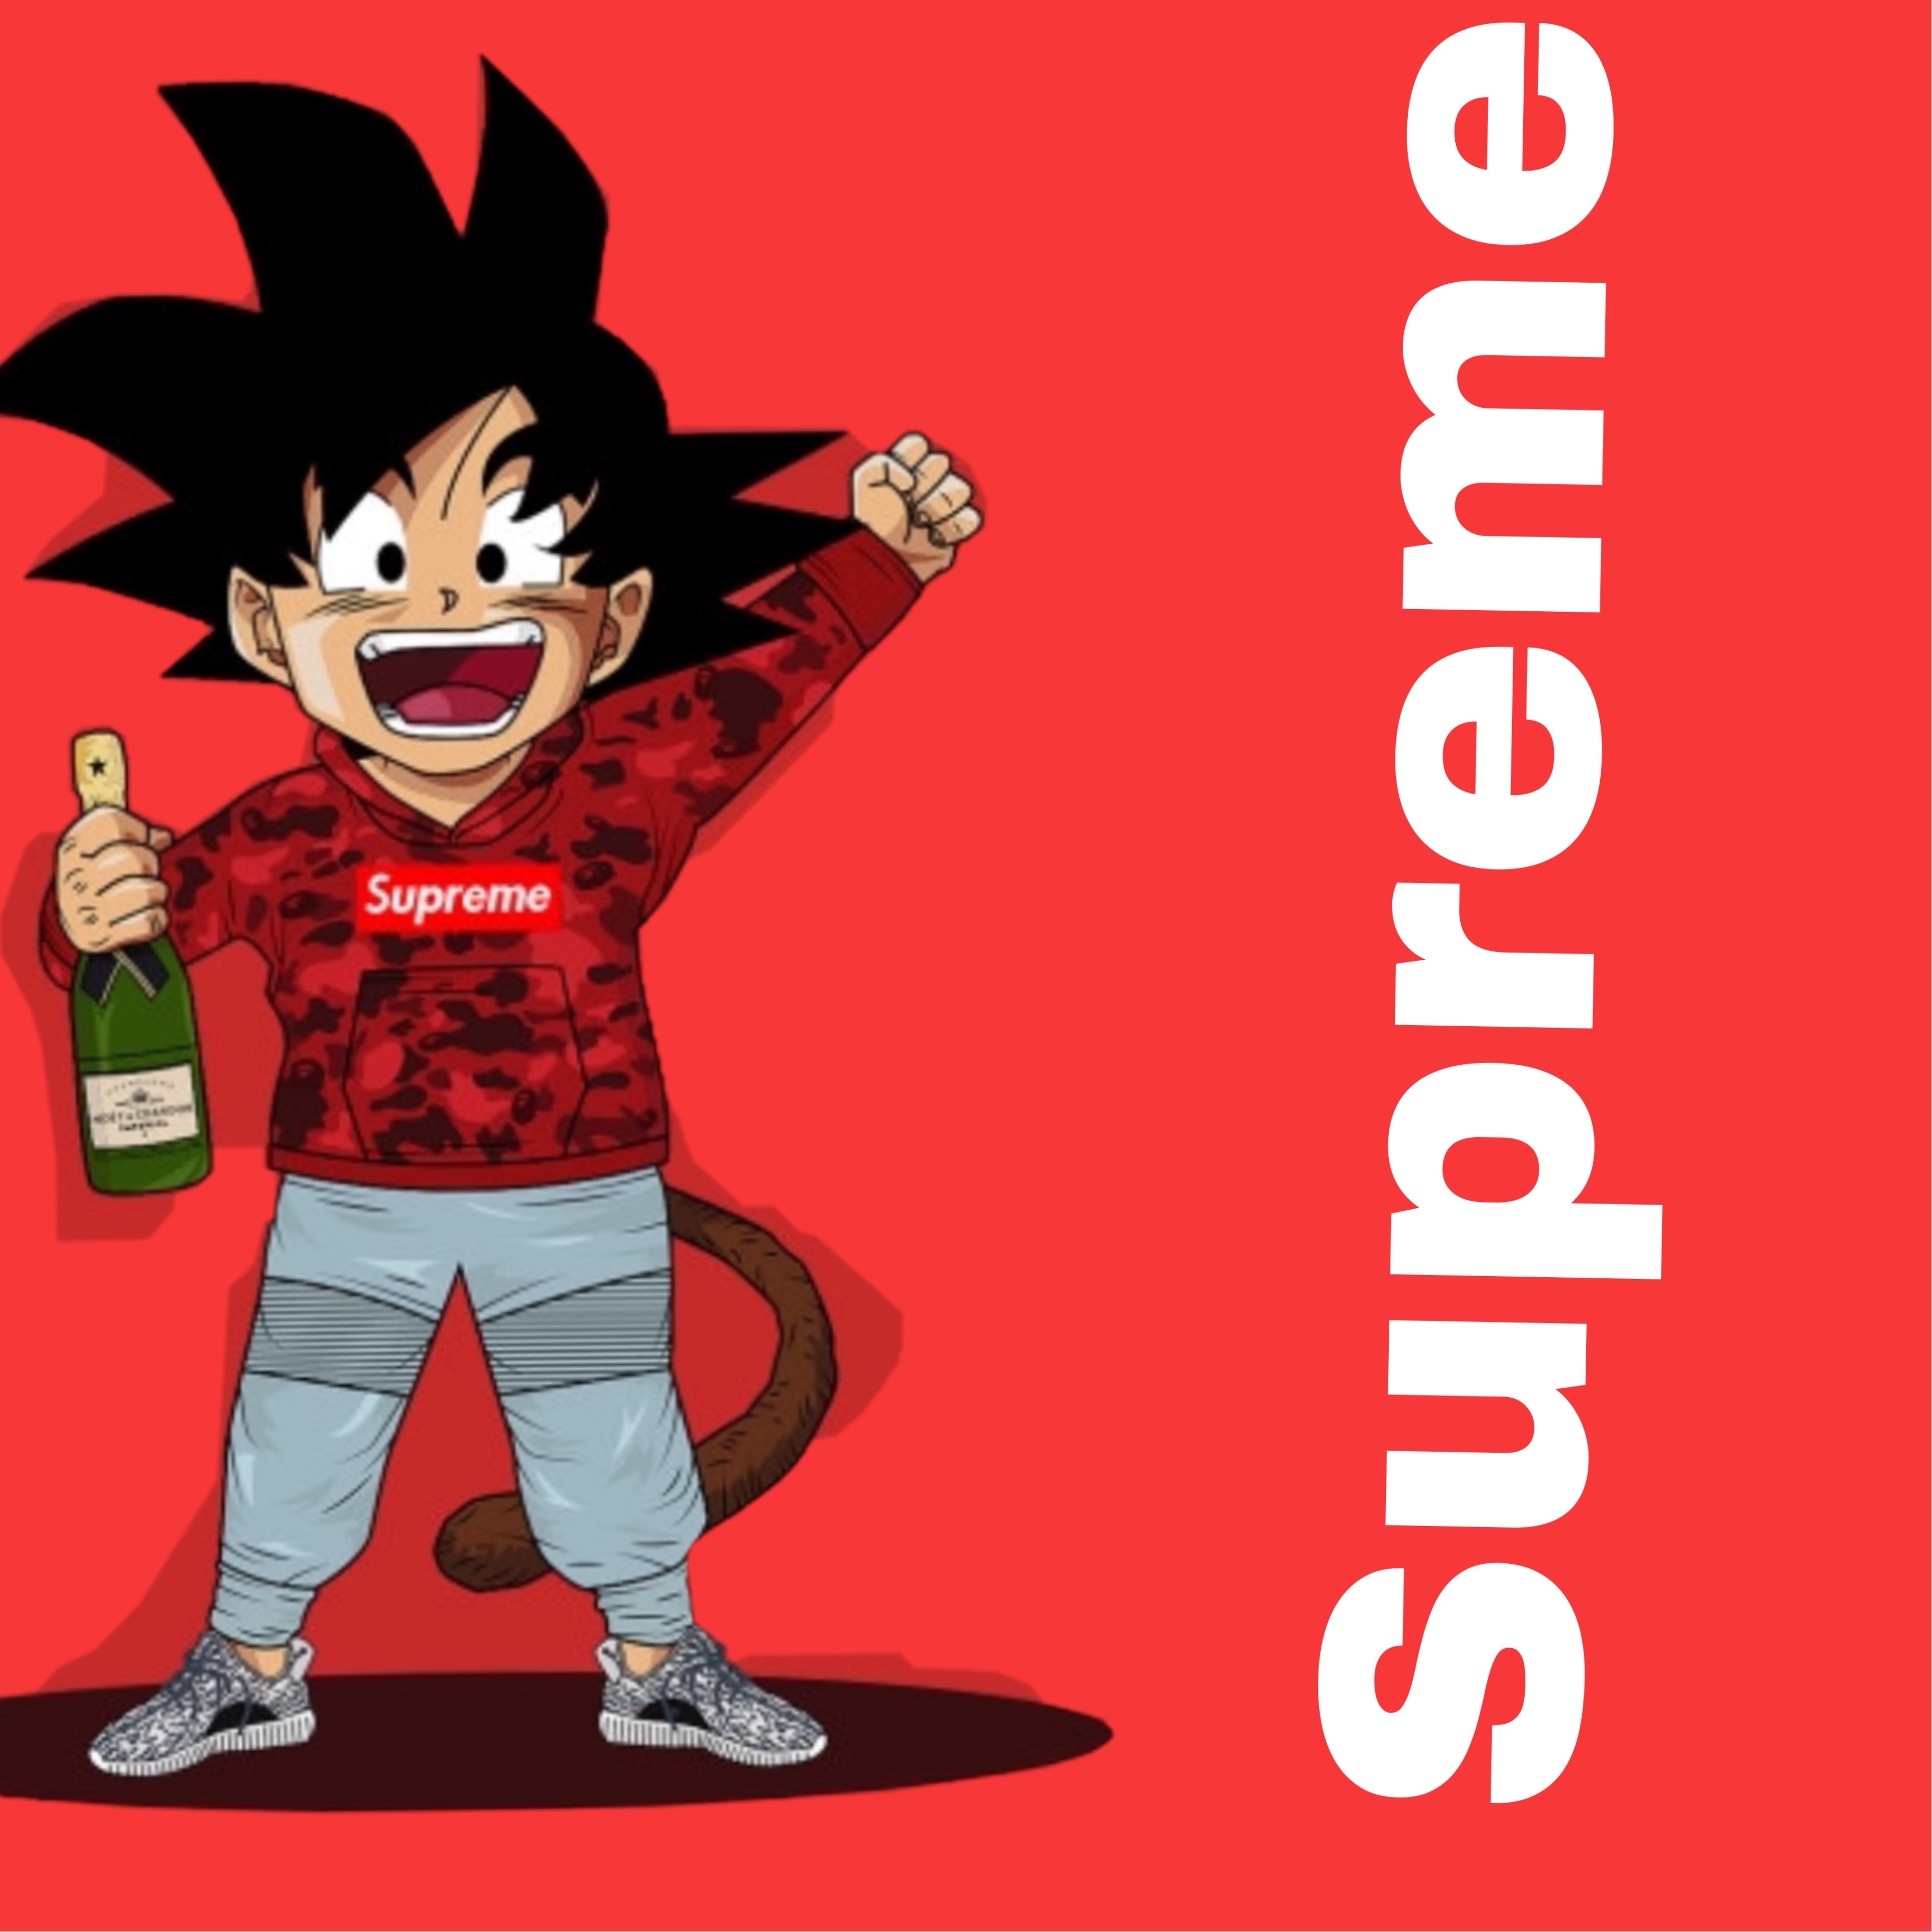 Supreme Goku Image By Dj